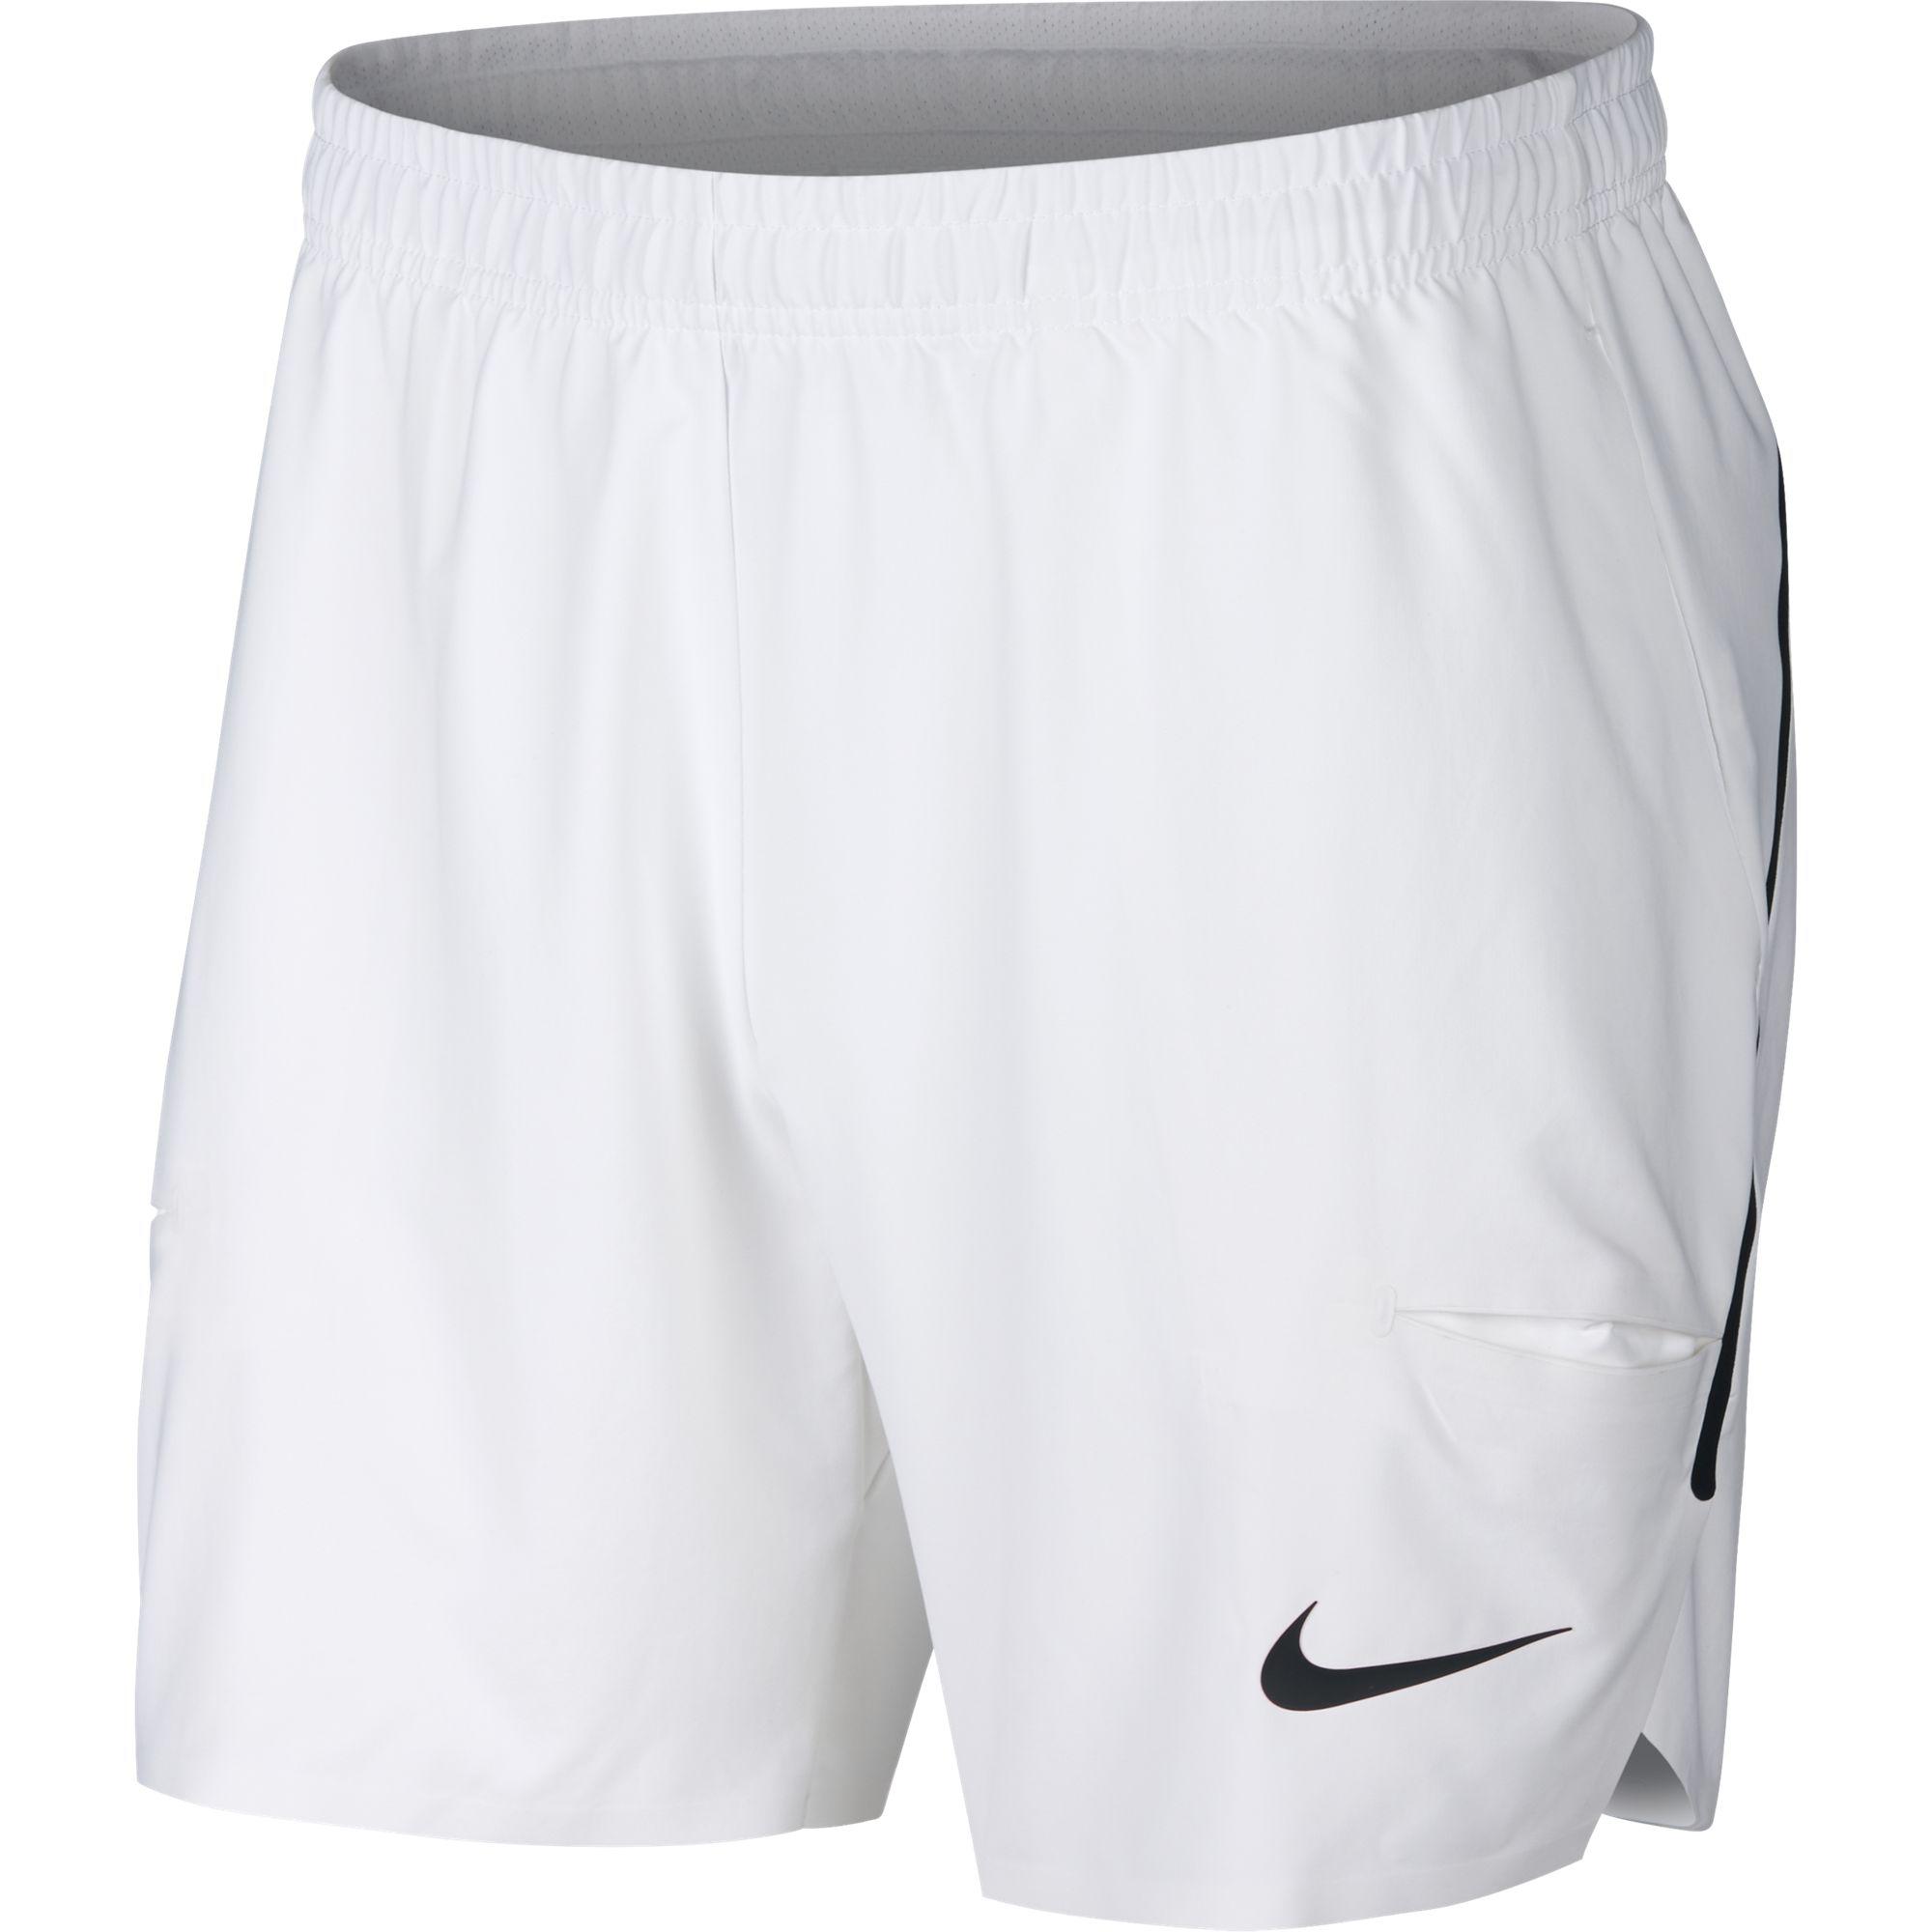 Estadístico tribu Azul Nike Mens Court Flex Ace 7 Inch Shorts - White/Black - Tennisnuts.com